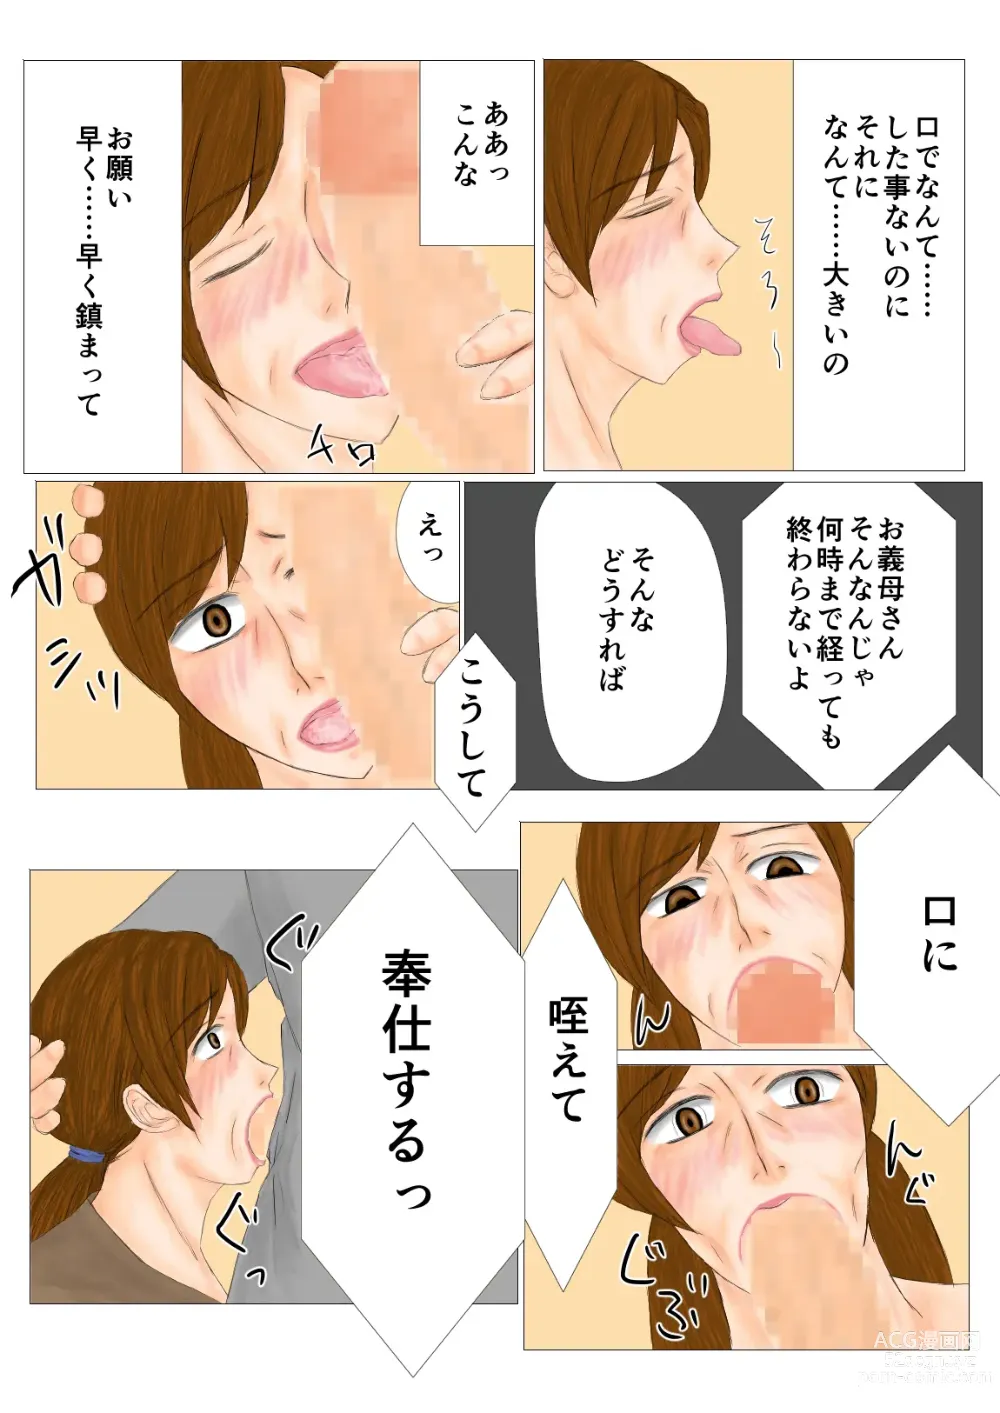 Page 7 of doujinshi Tsumahahakan